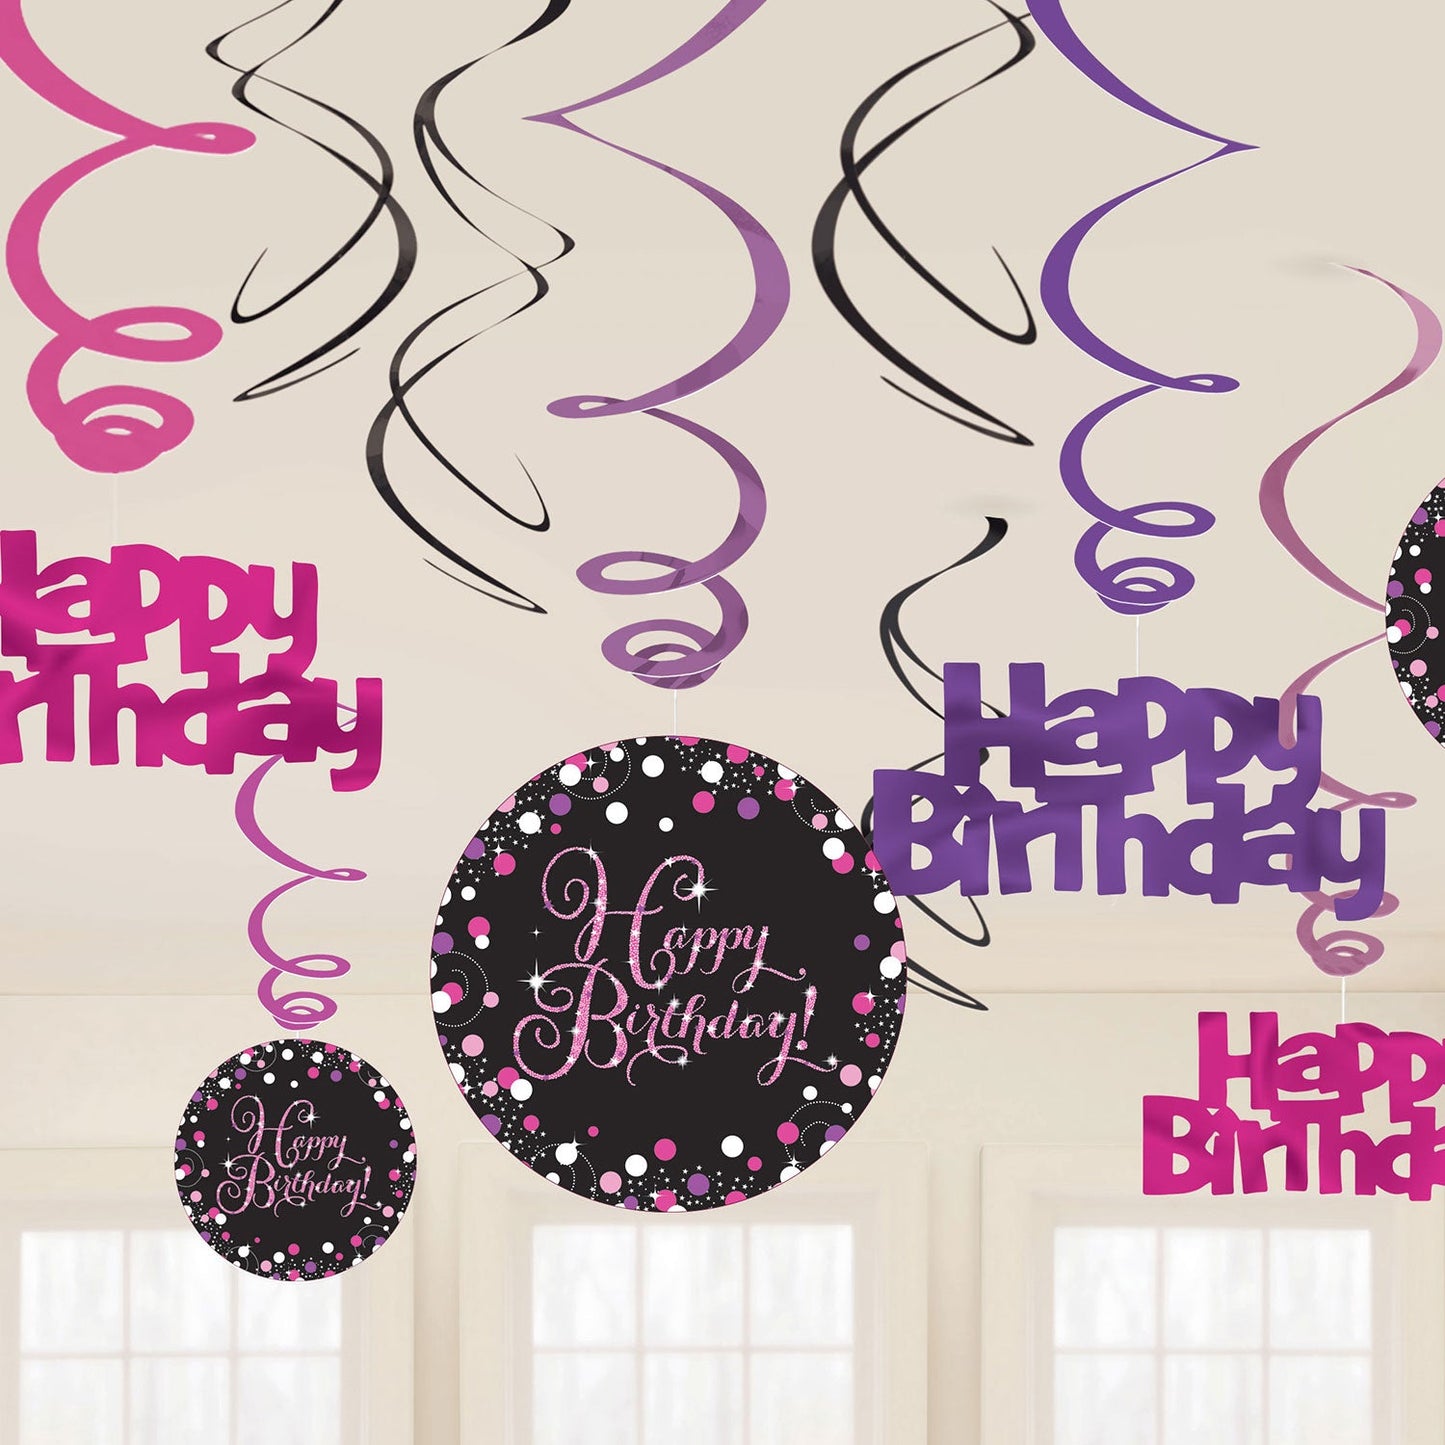 Pink Celebration Birthday Swirl Decorations . Contains 6 Foil Swirls 45cm, 3 Swirls 60cm with Card Numbers, 3 Foil Swirls 60cm with Foil Numbers